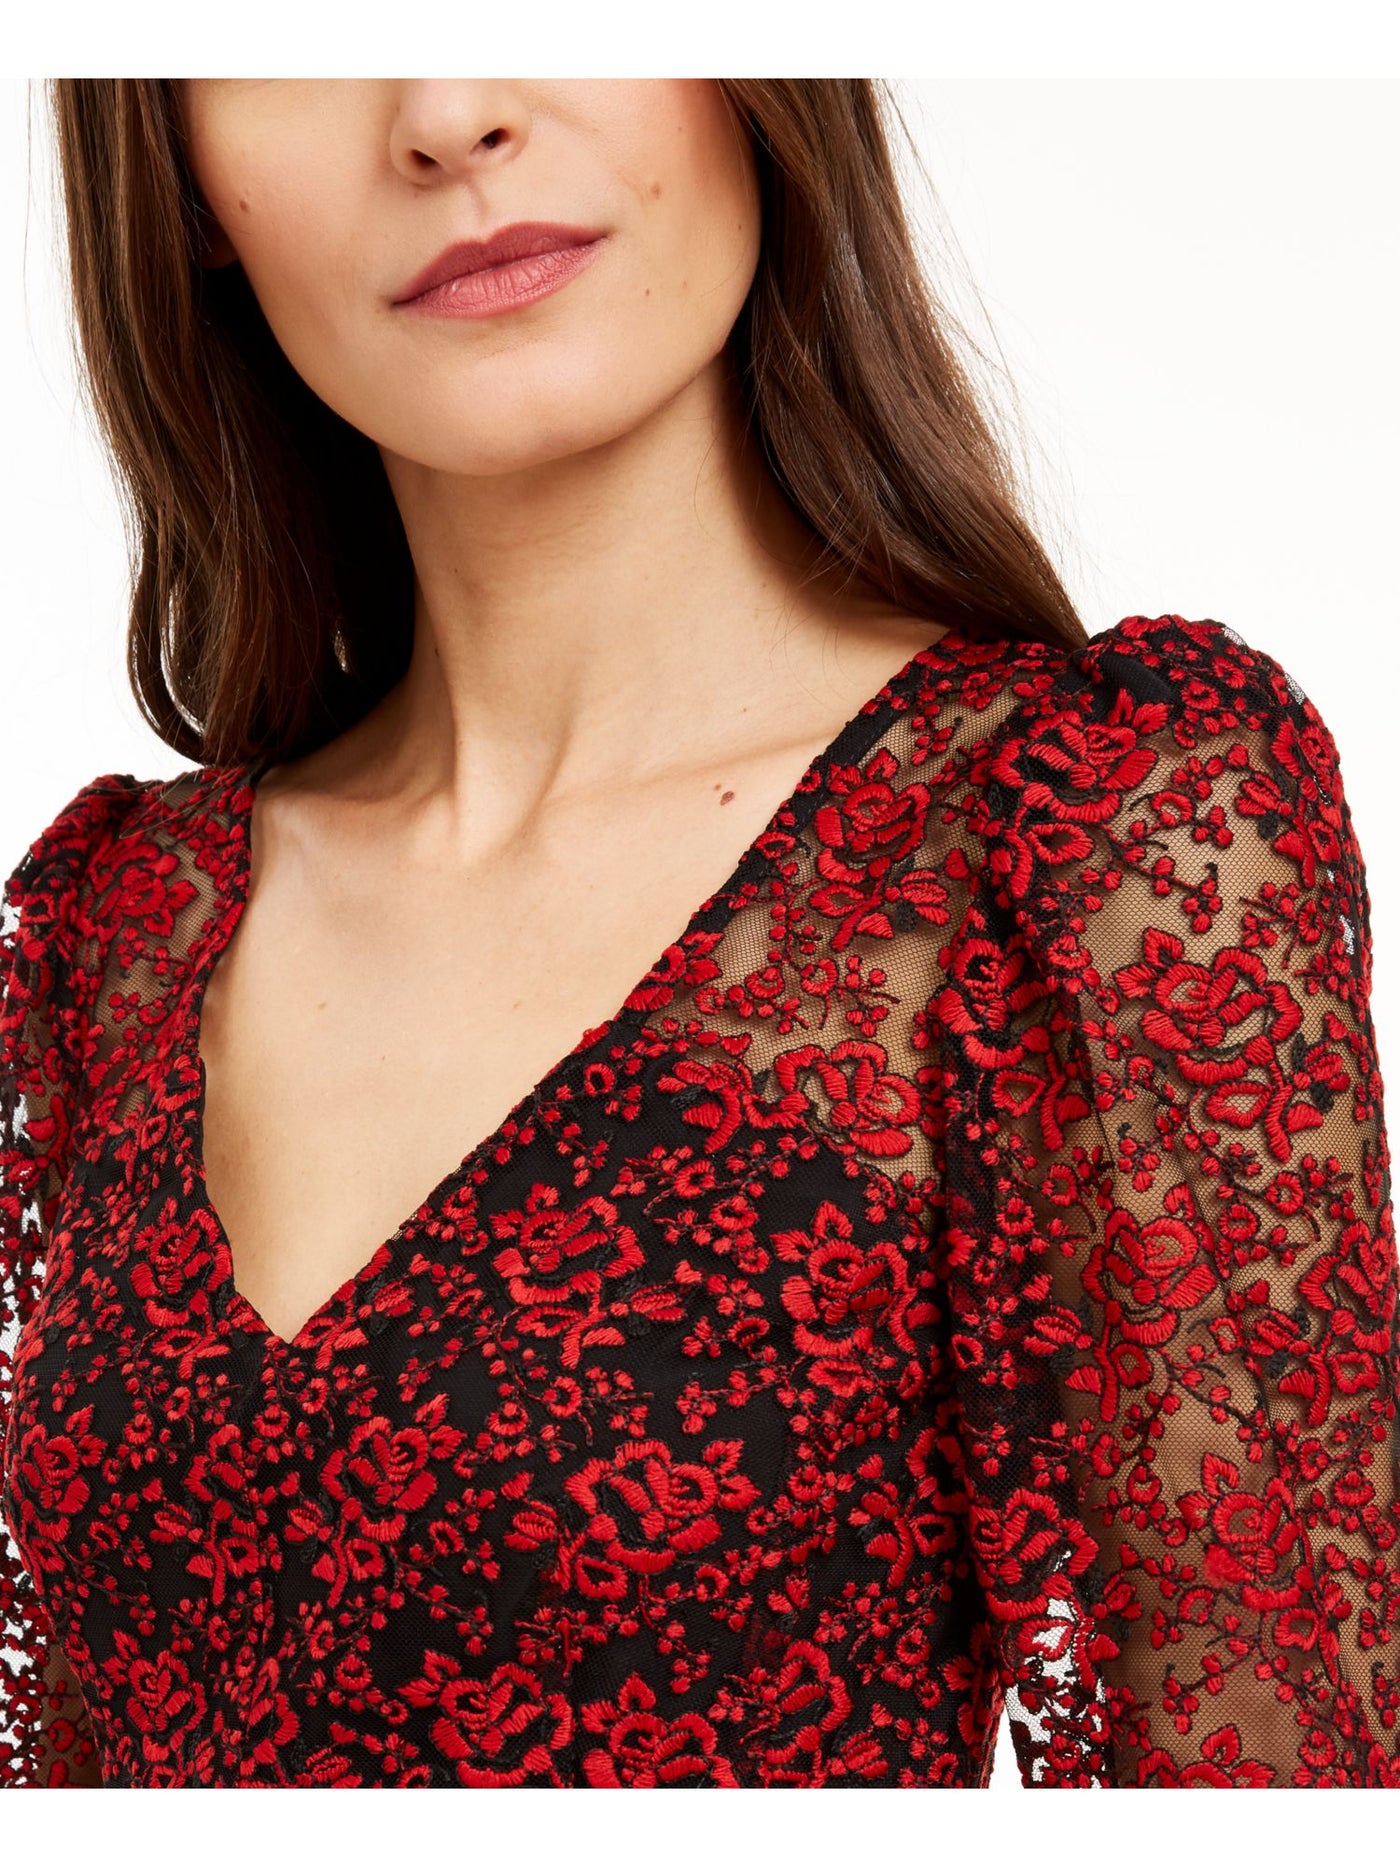 NANETTE LEPORE Womens Red Sheer Floral 3/4 Sleeve V Neck Top Size: 6